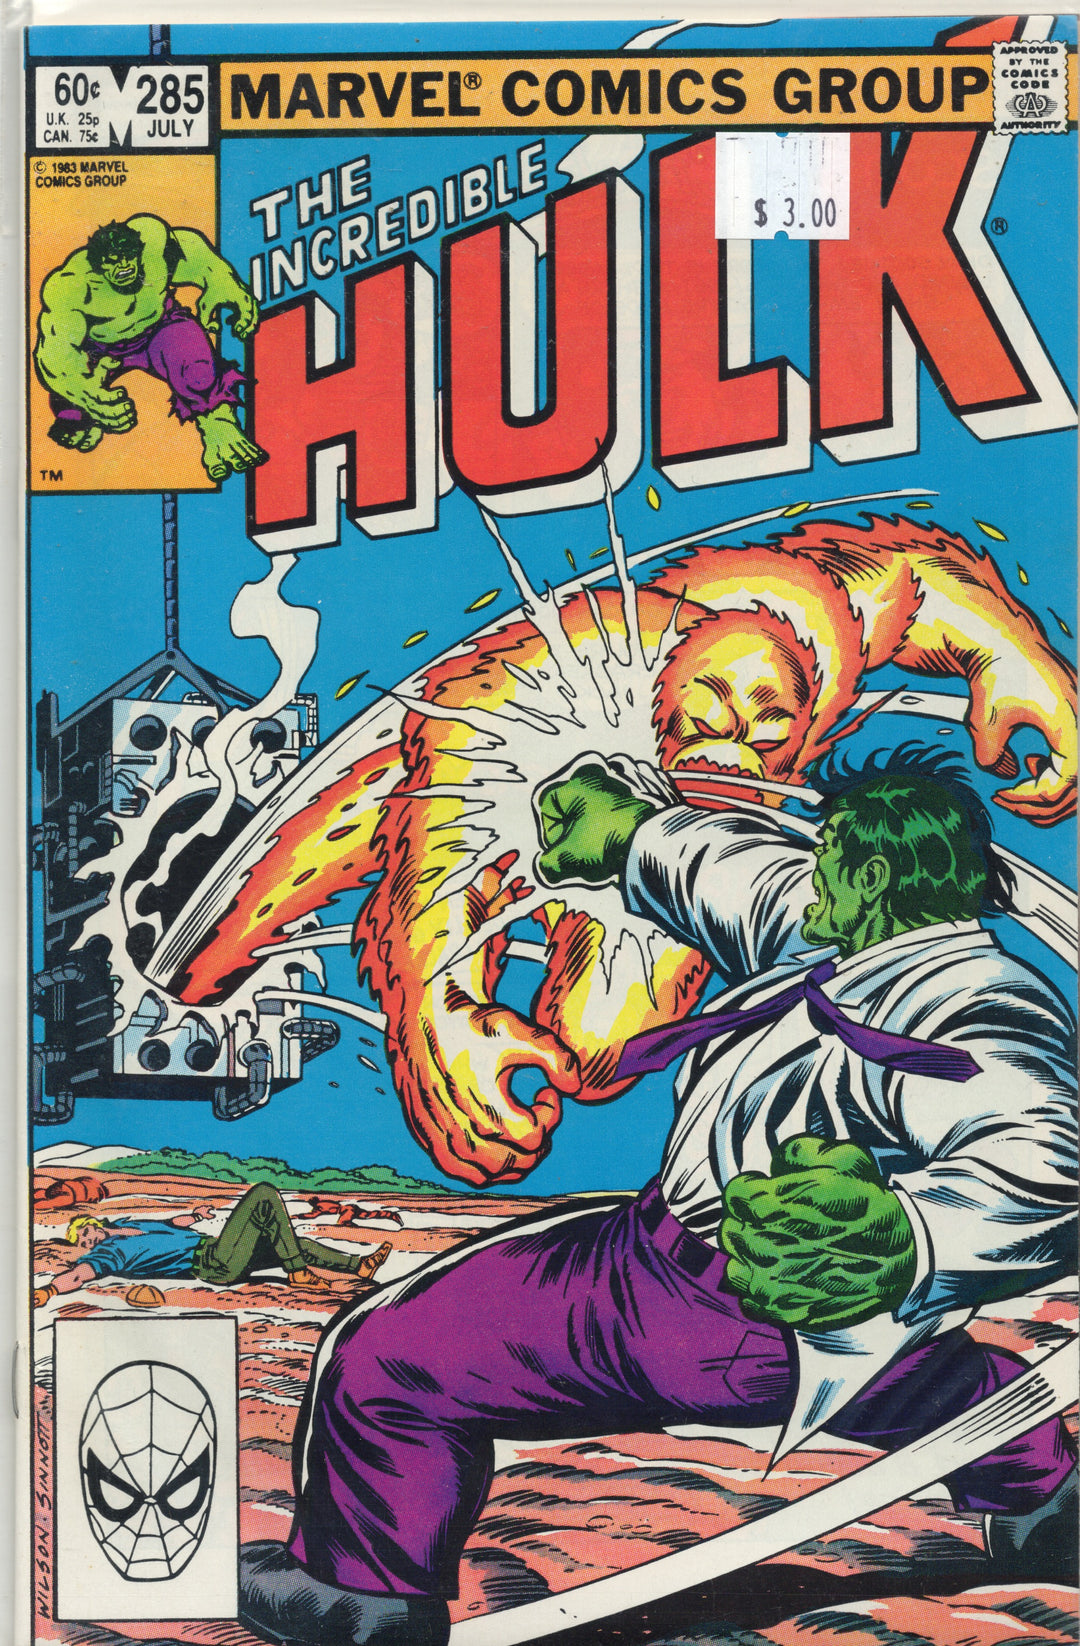 The Incredible Hulk #285